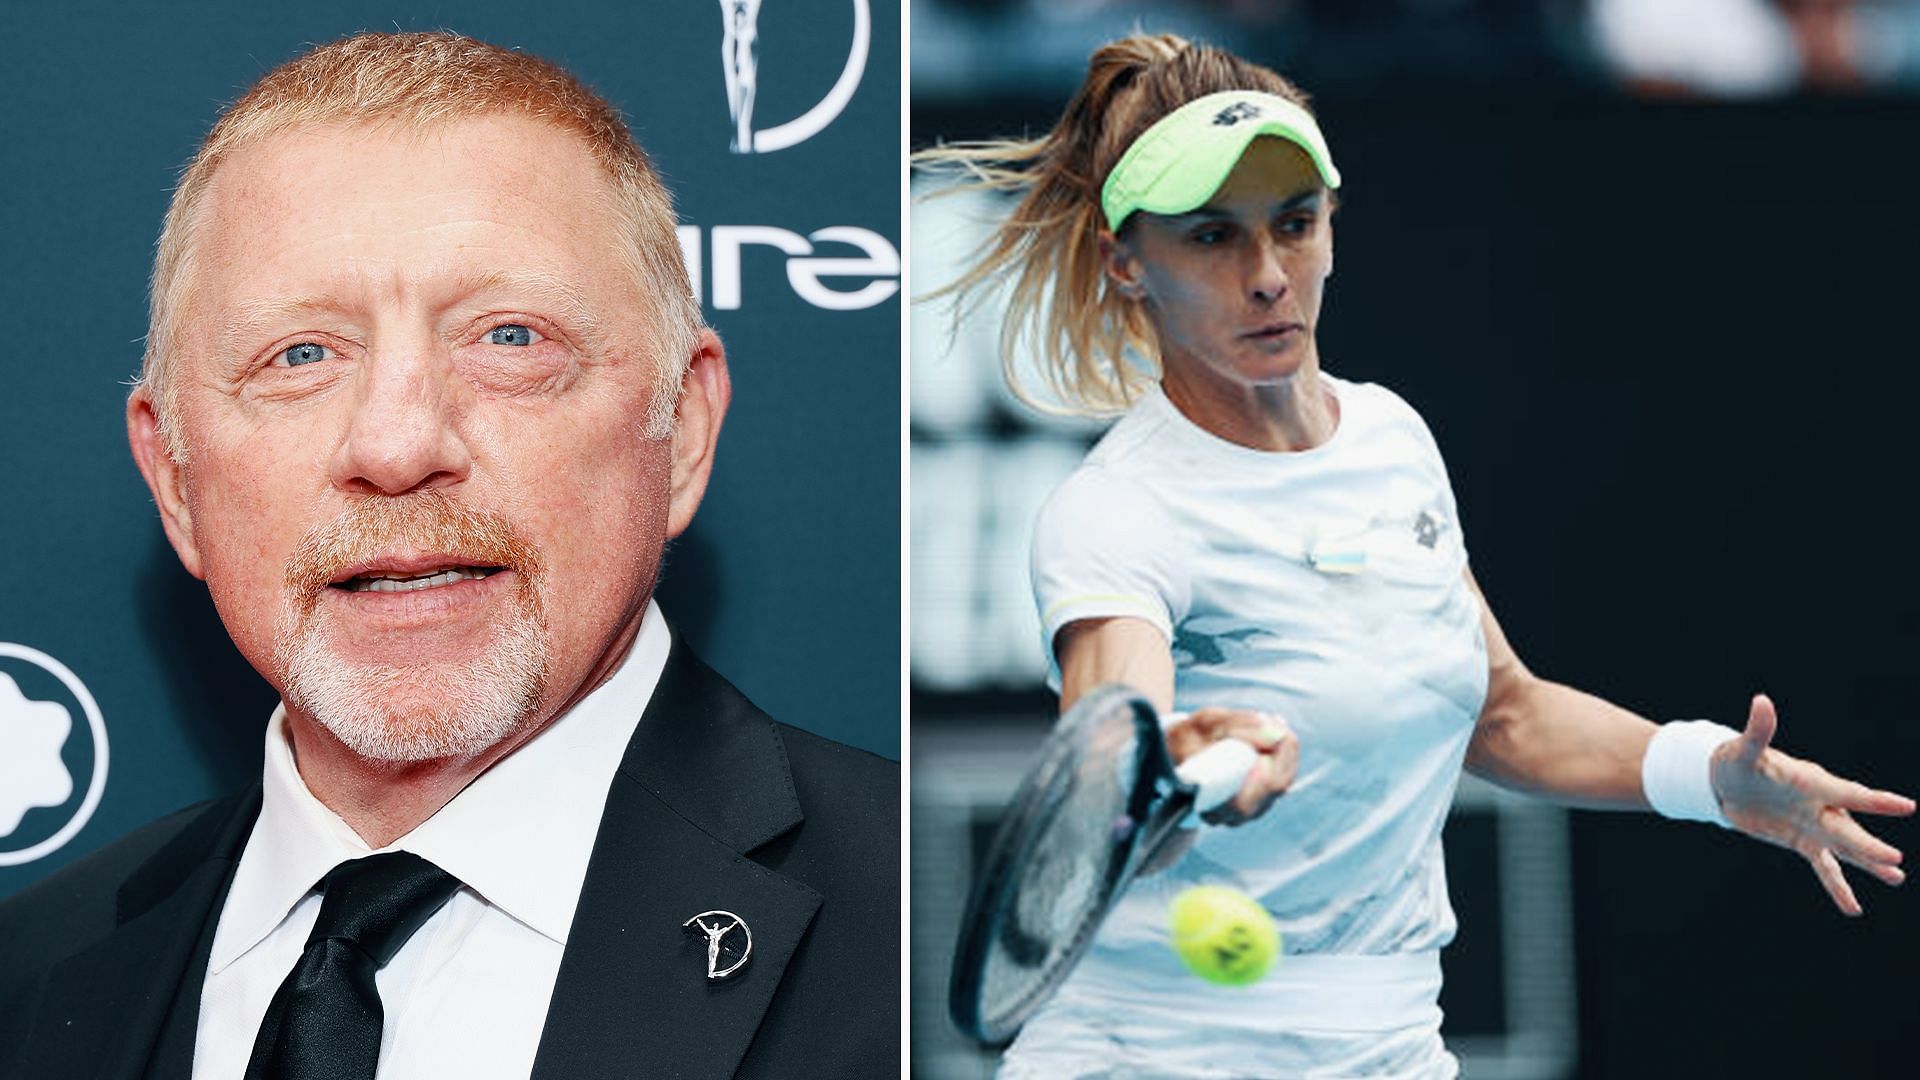 Boris Becker and Lesia Tsurenko. (Photo Credits: Getty Images)